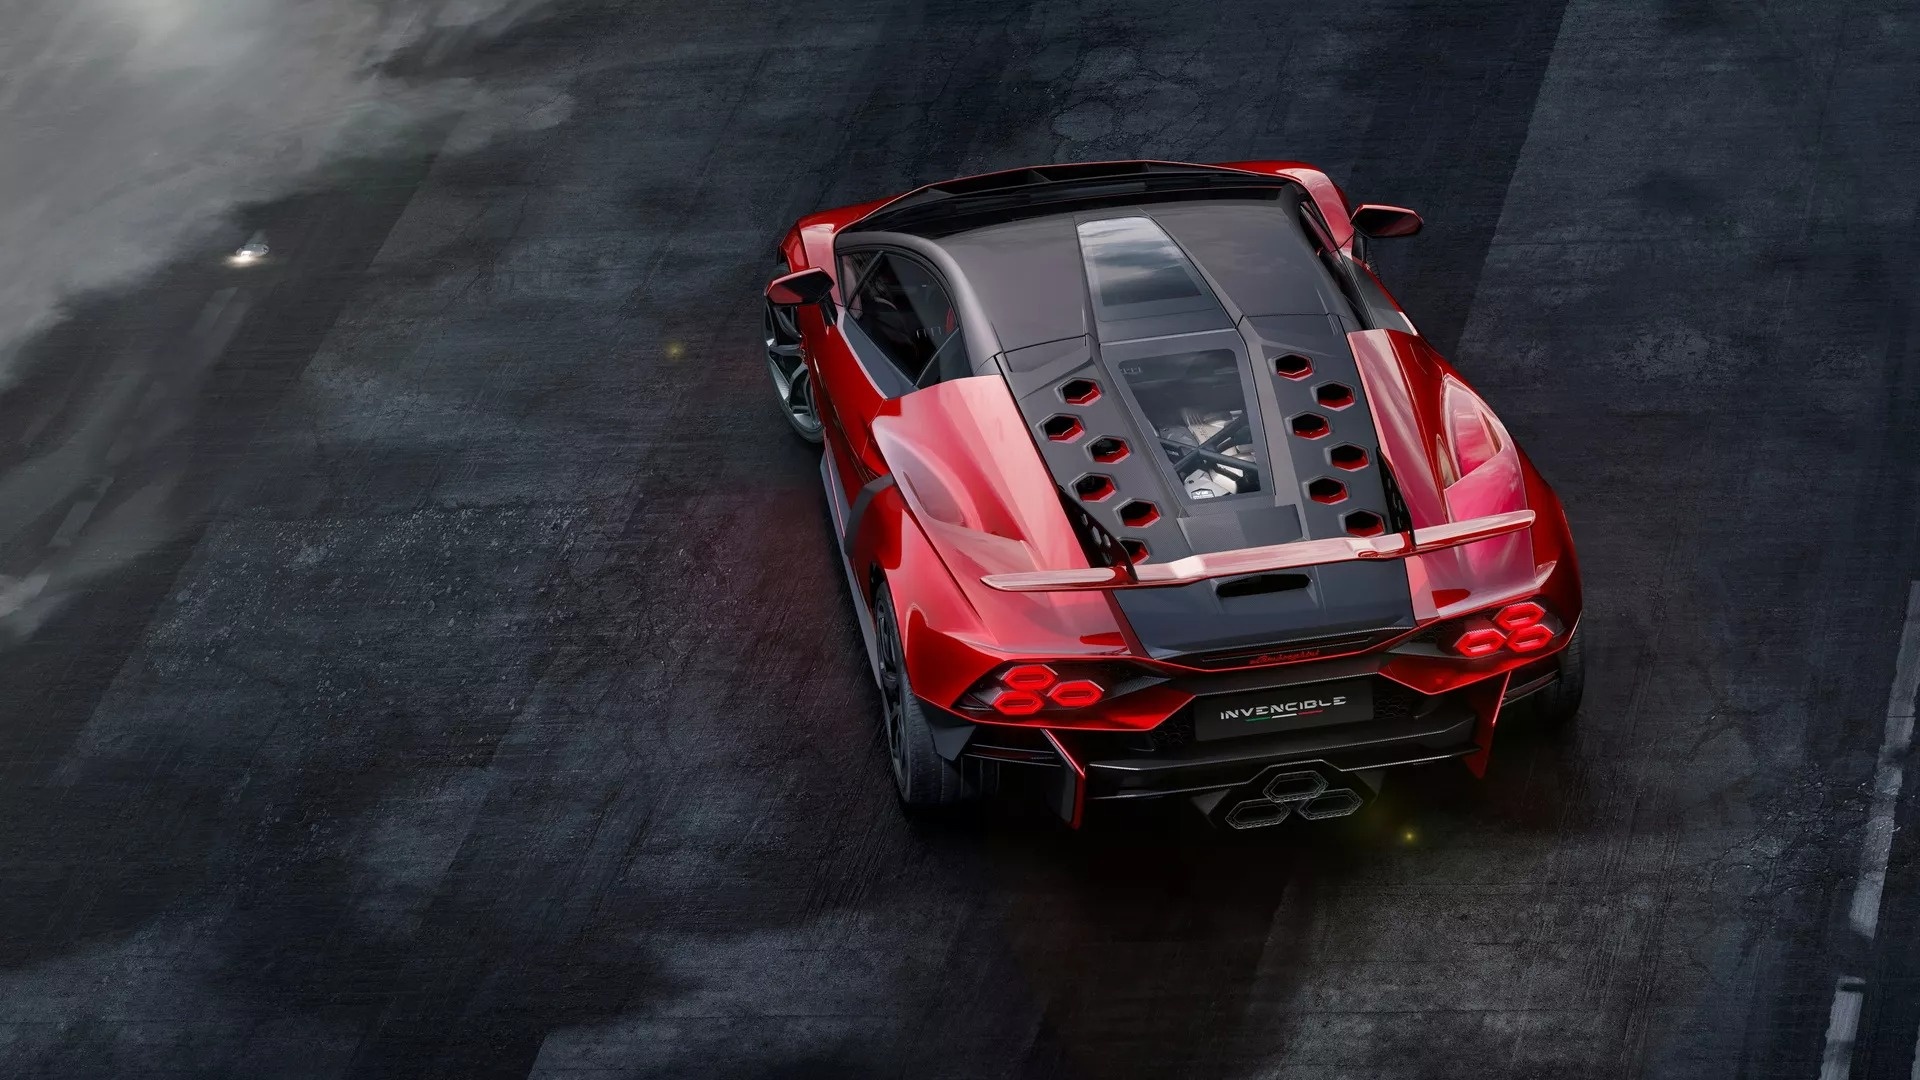 Chi tiết siêu xe Lamborghini Invencible và Autentica vừa ra mắt - ảnh 3